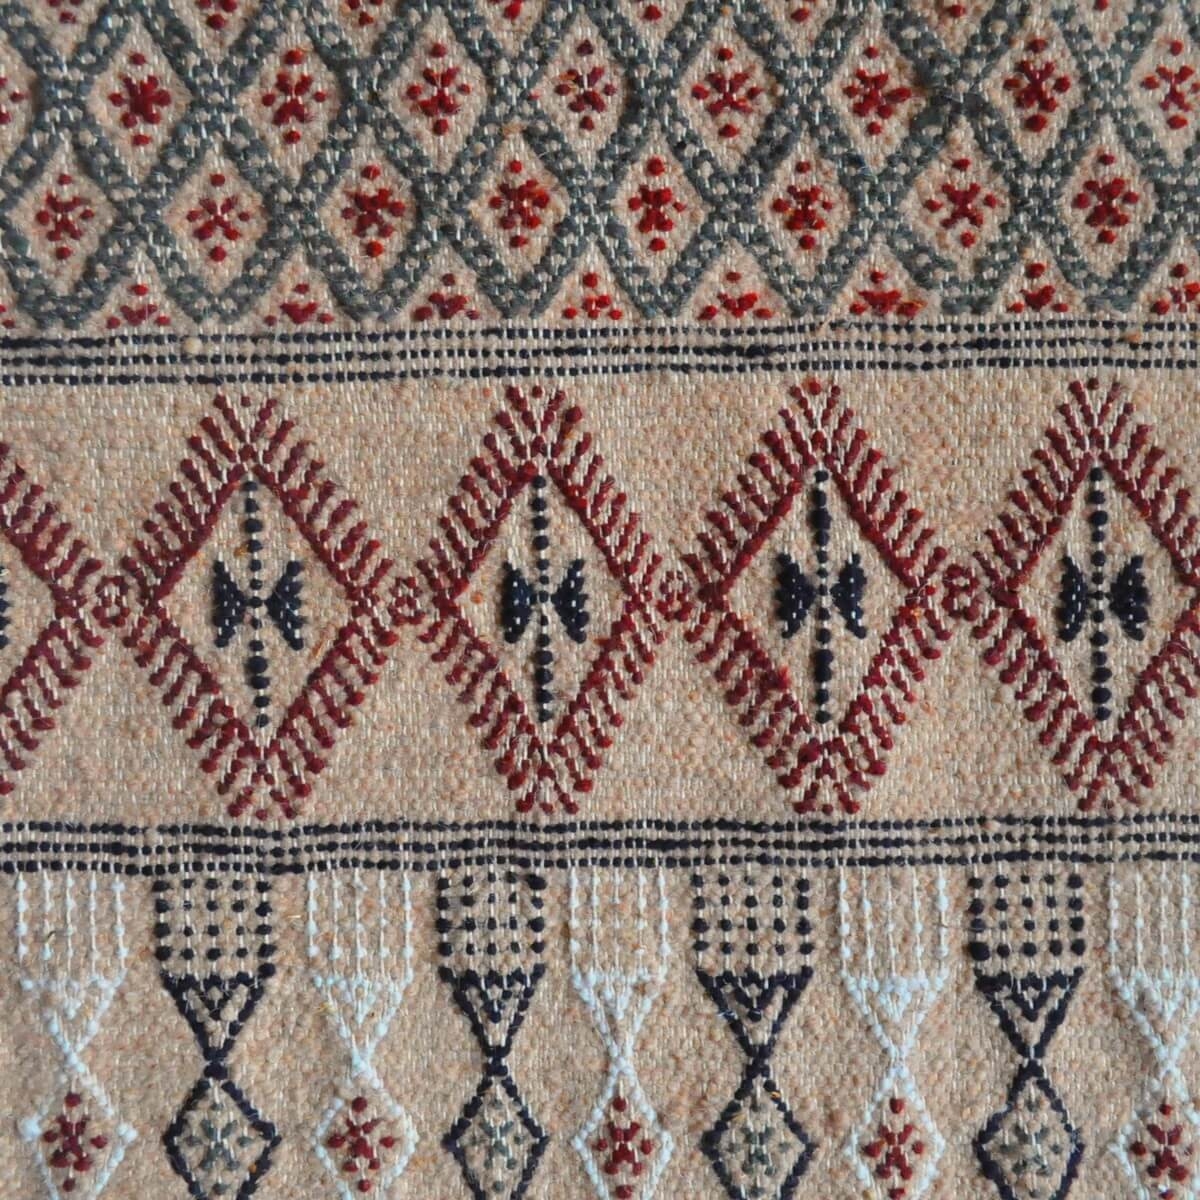 Berber carpet Large Rug Margoum Jilma 160x250 Beige (Handmade, Wool) Tunisian margoum rug from the city of Kairouan. Rectangular